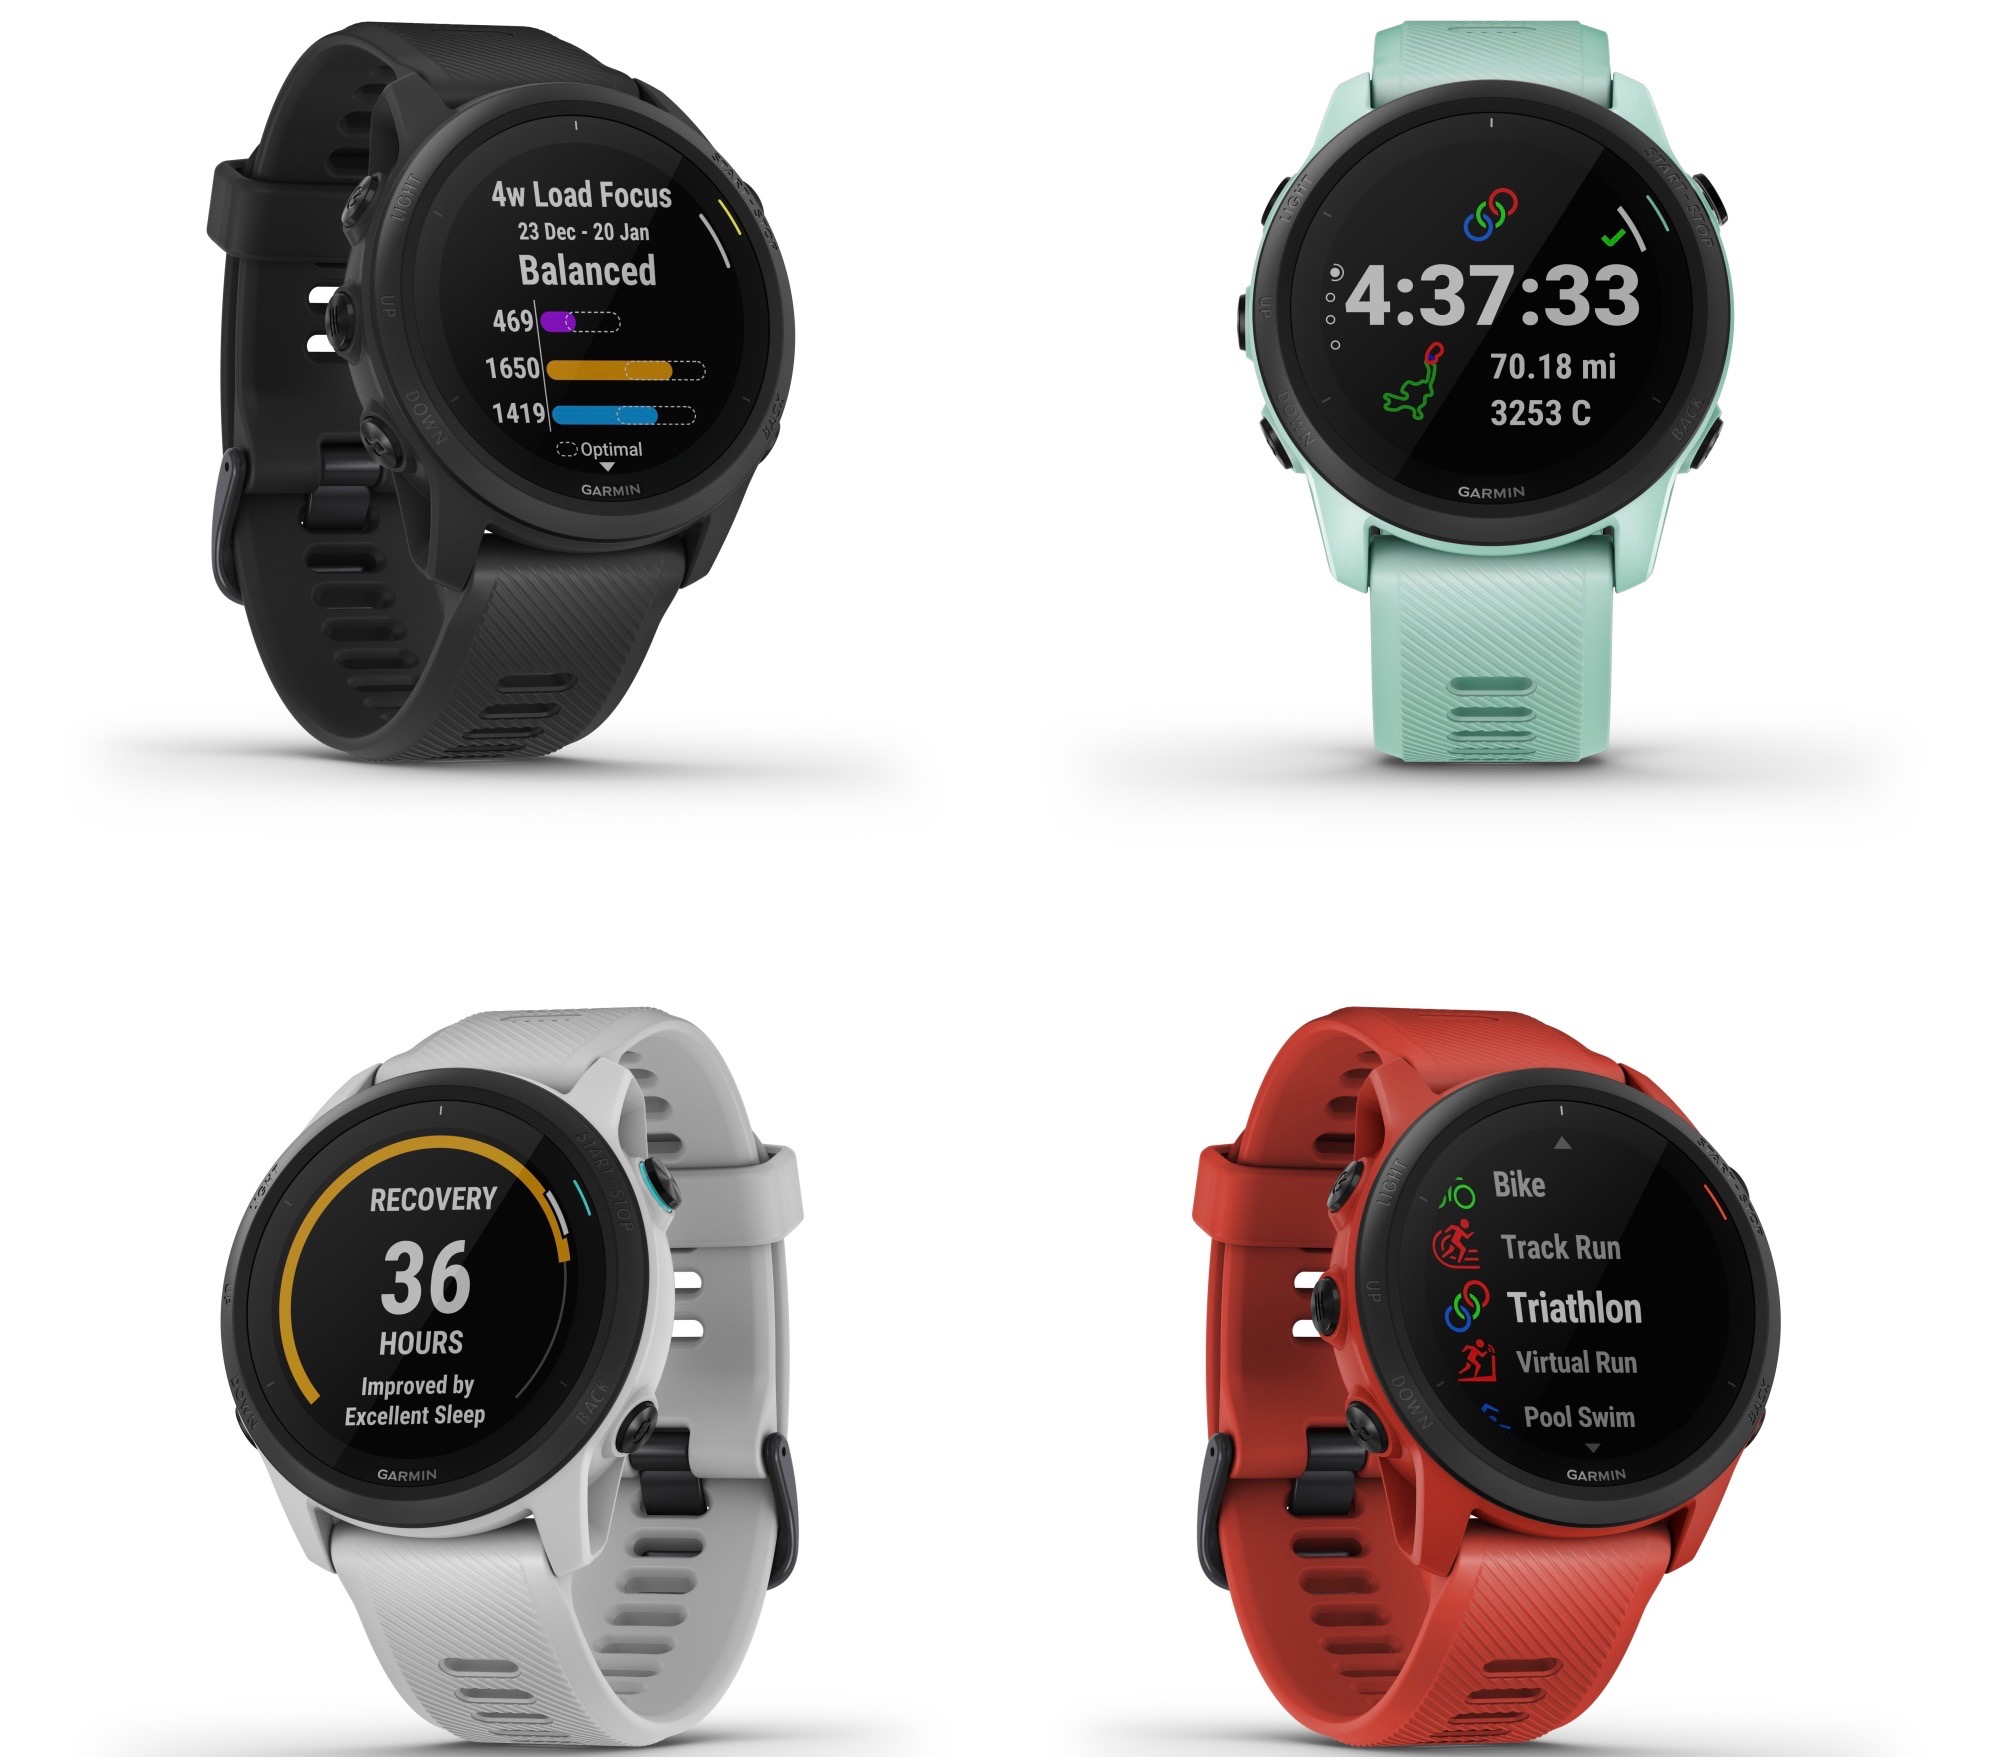 Garmin releases new GPS smartwatch to 